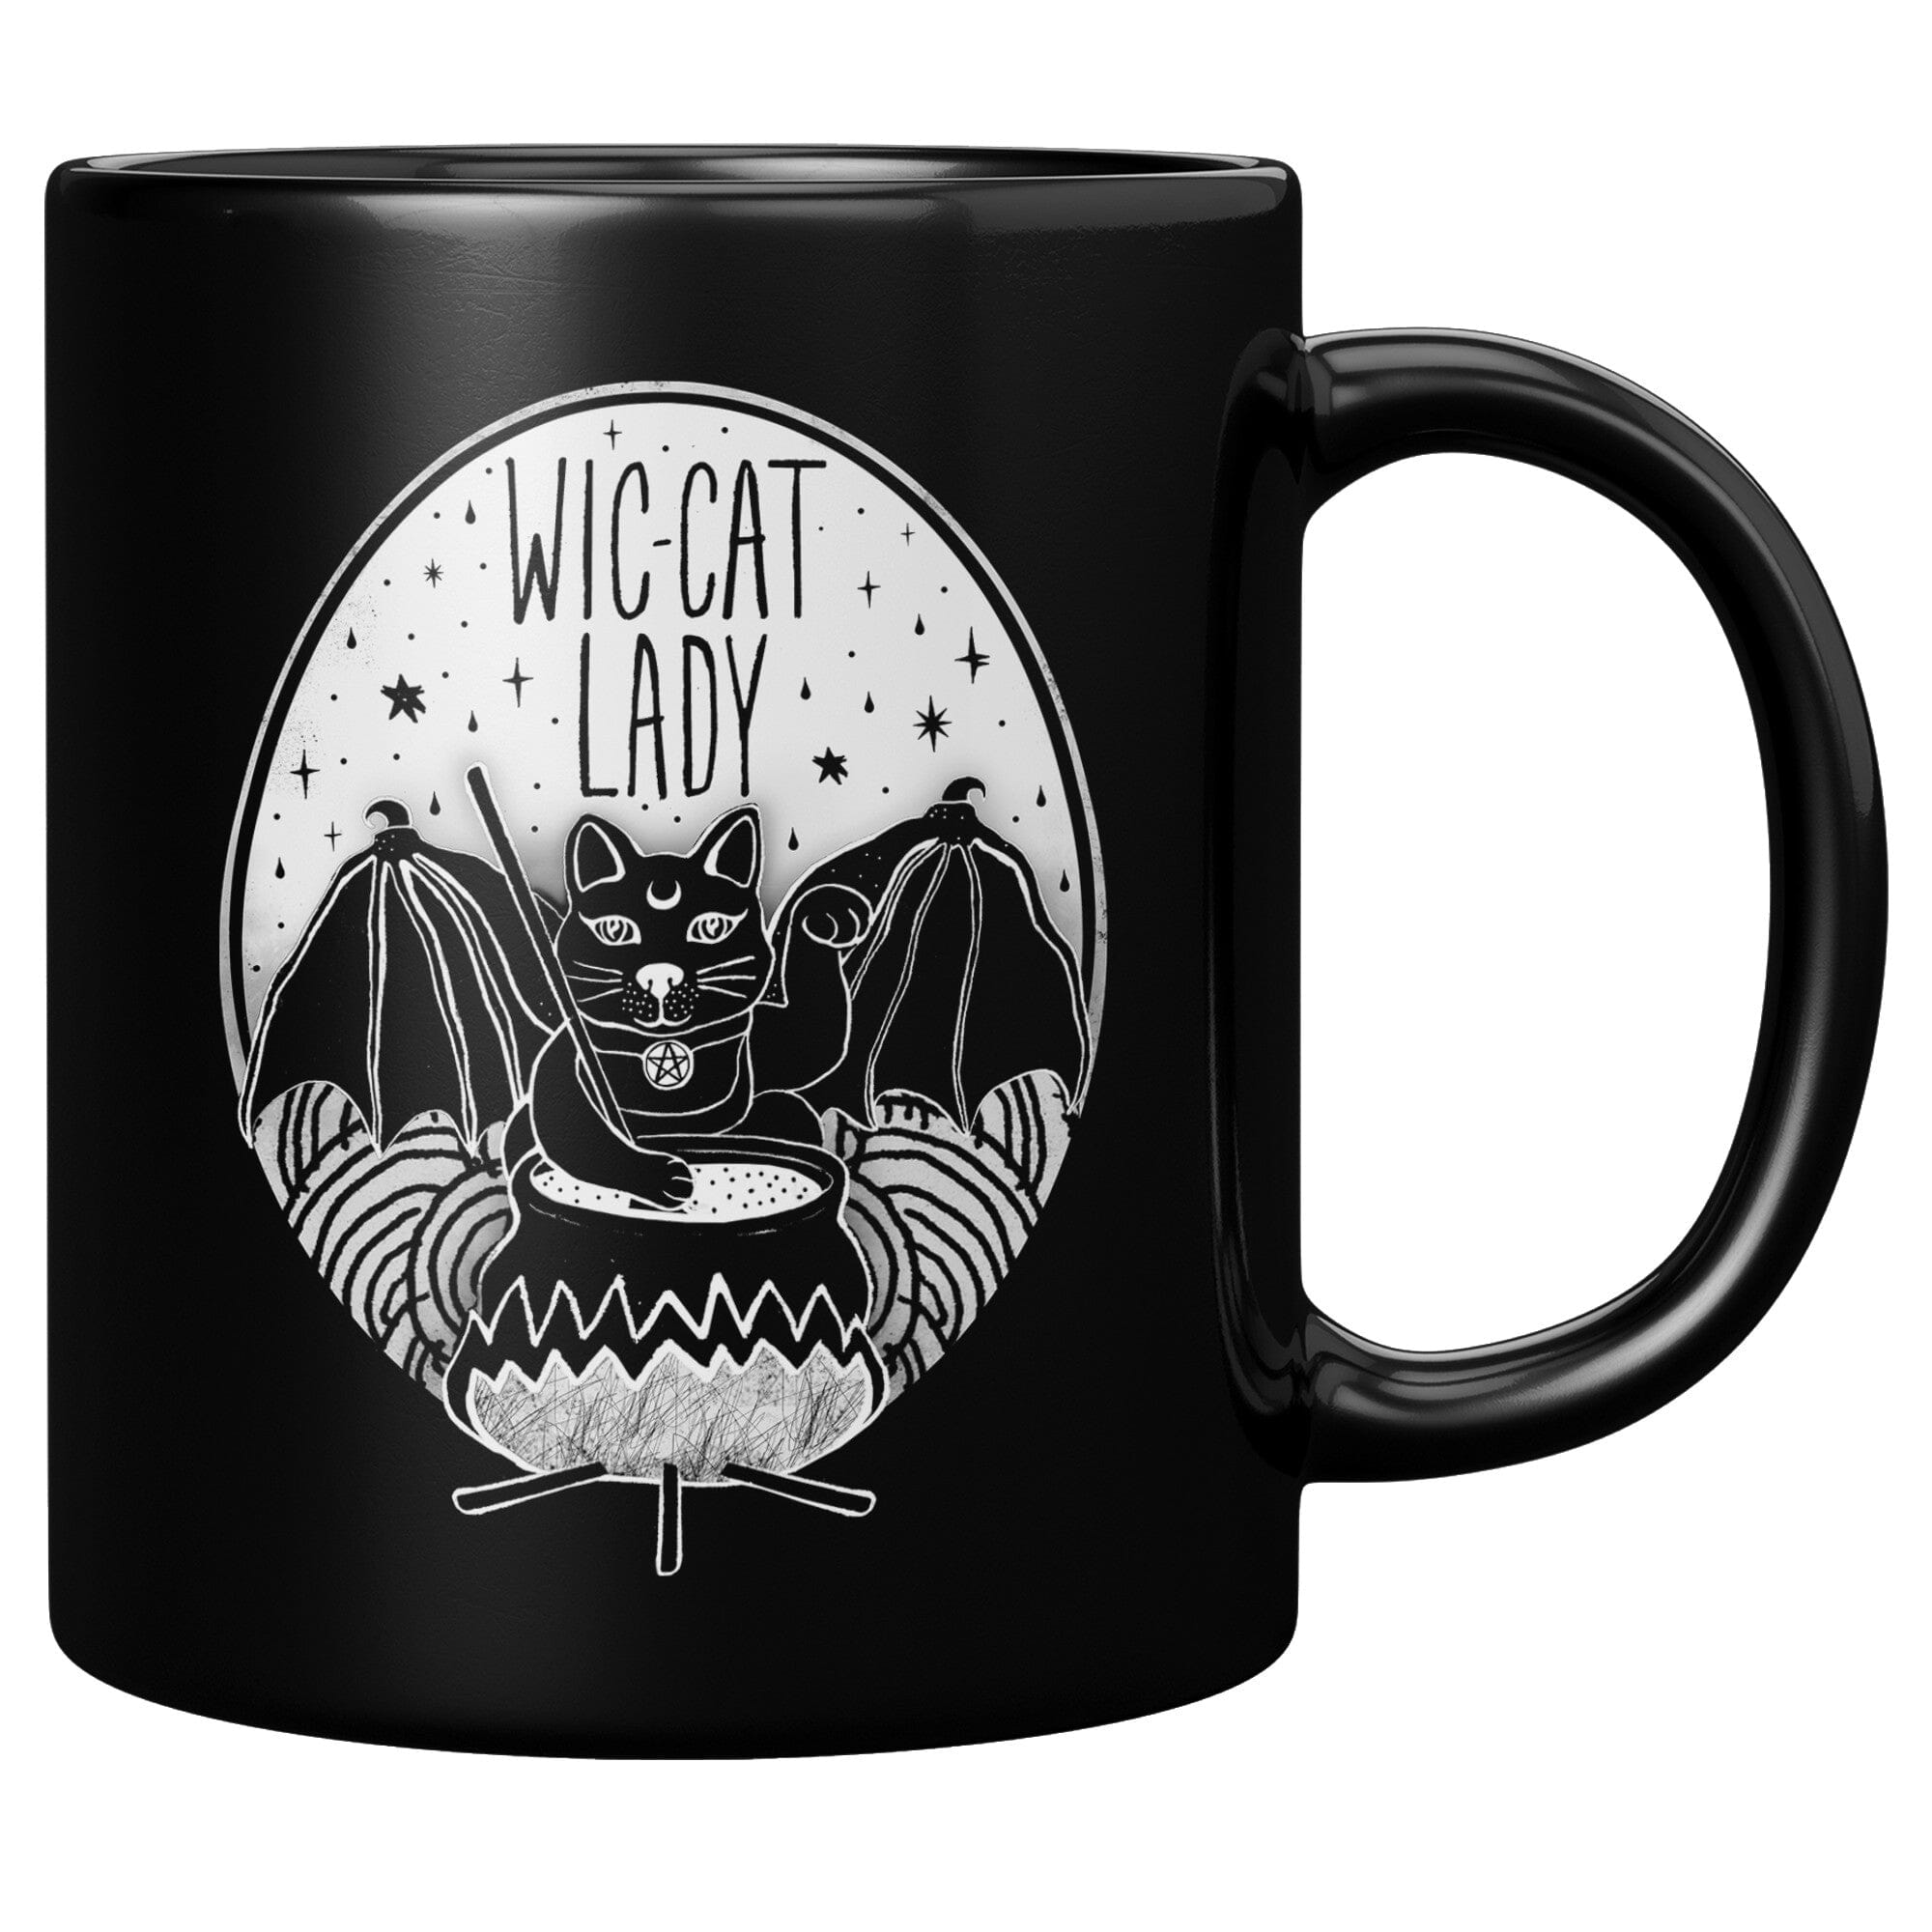 Wic-cat Lady - 11oz Black Mug